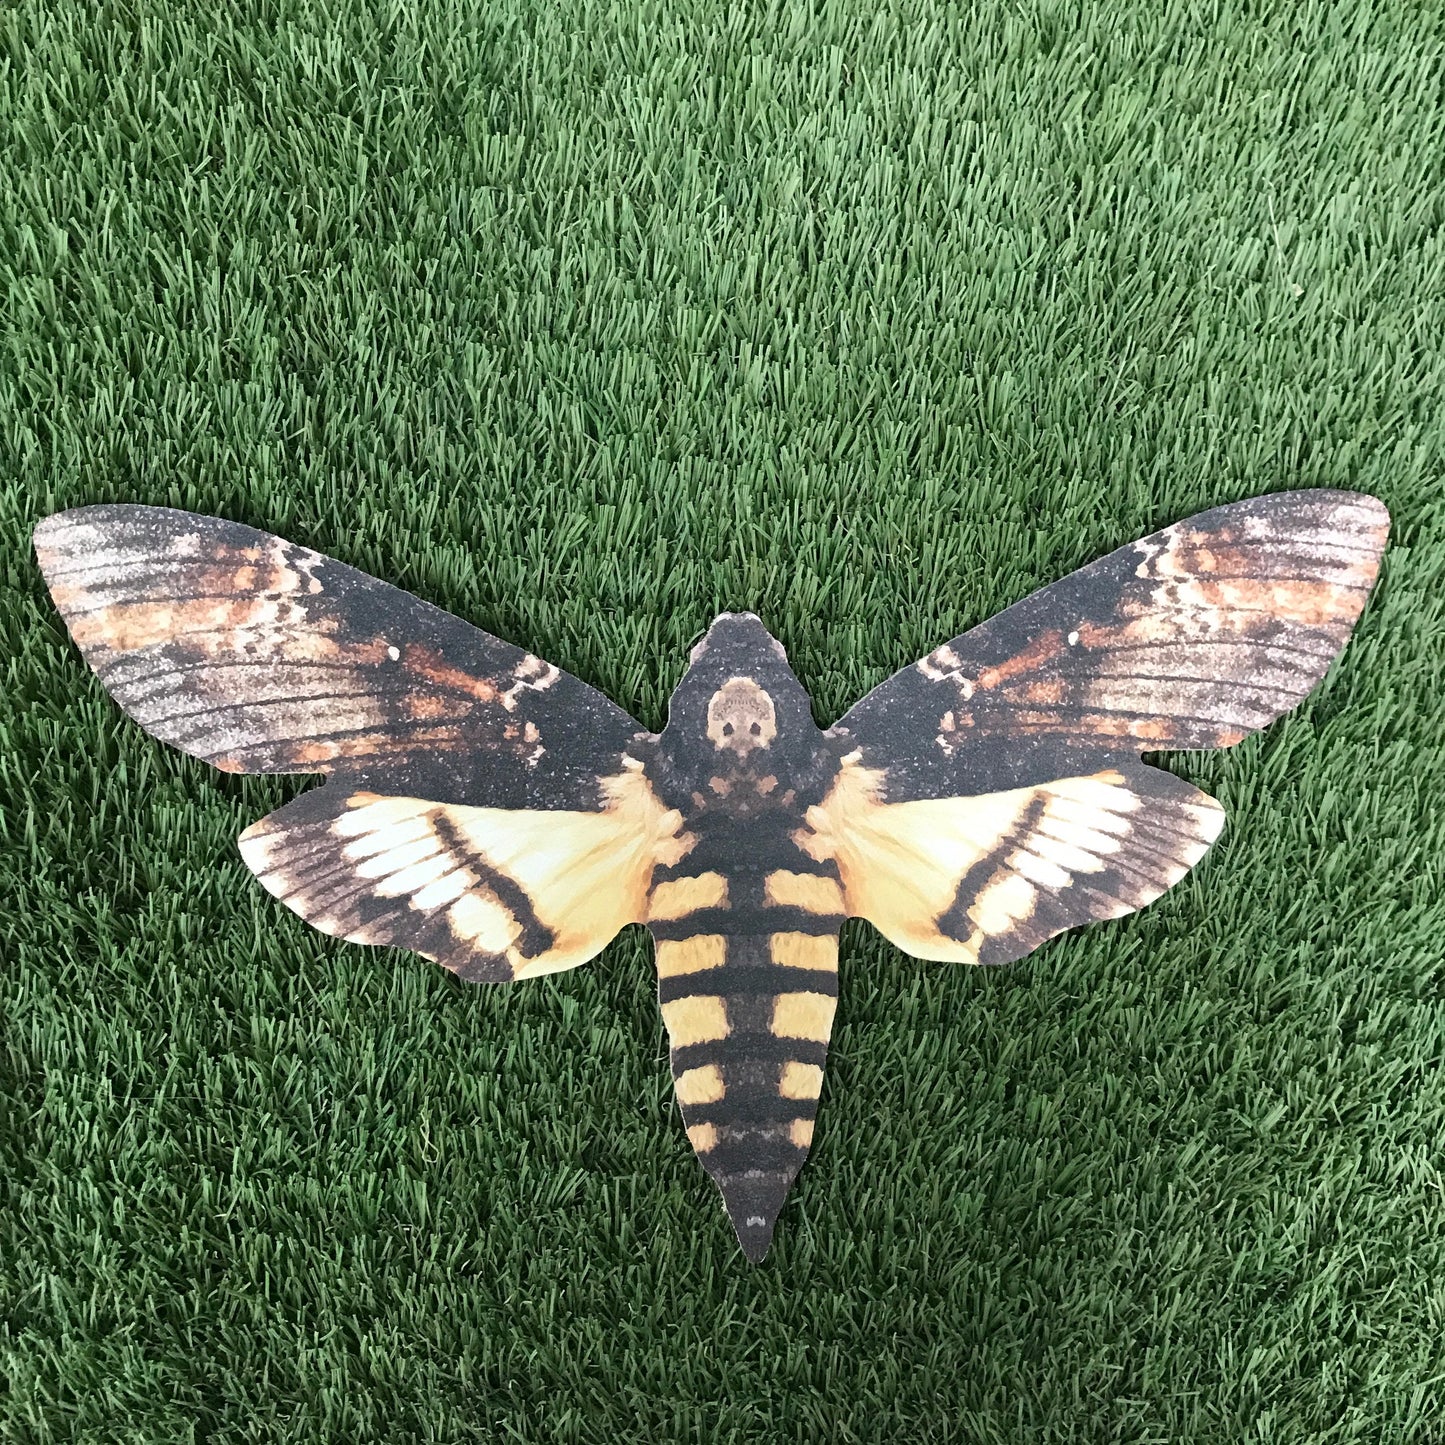 Giant Death Moth Decoration